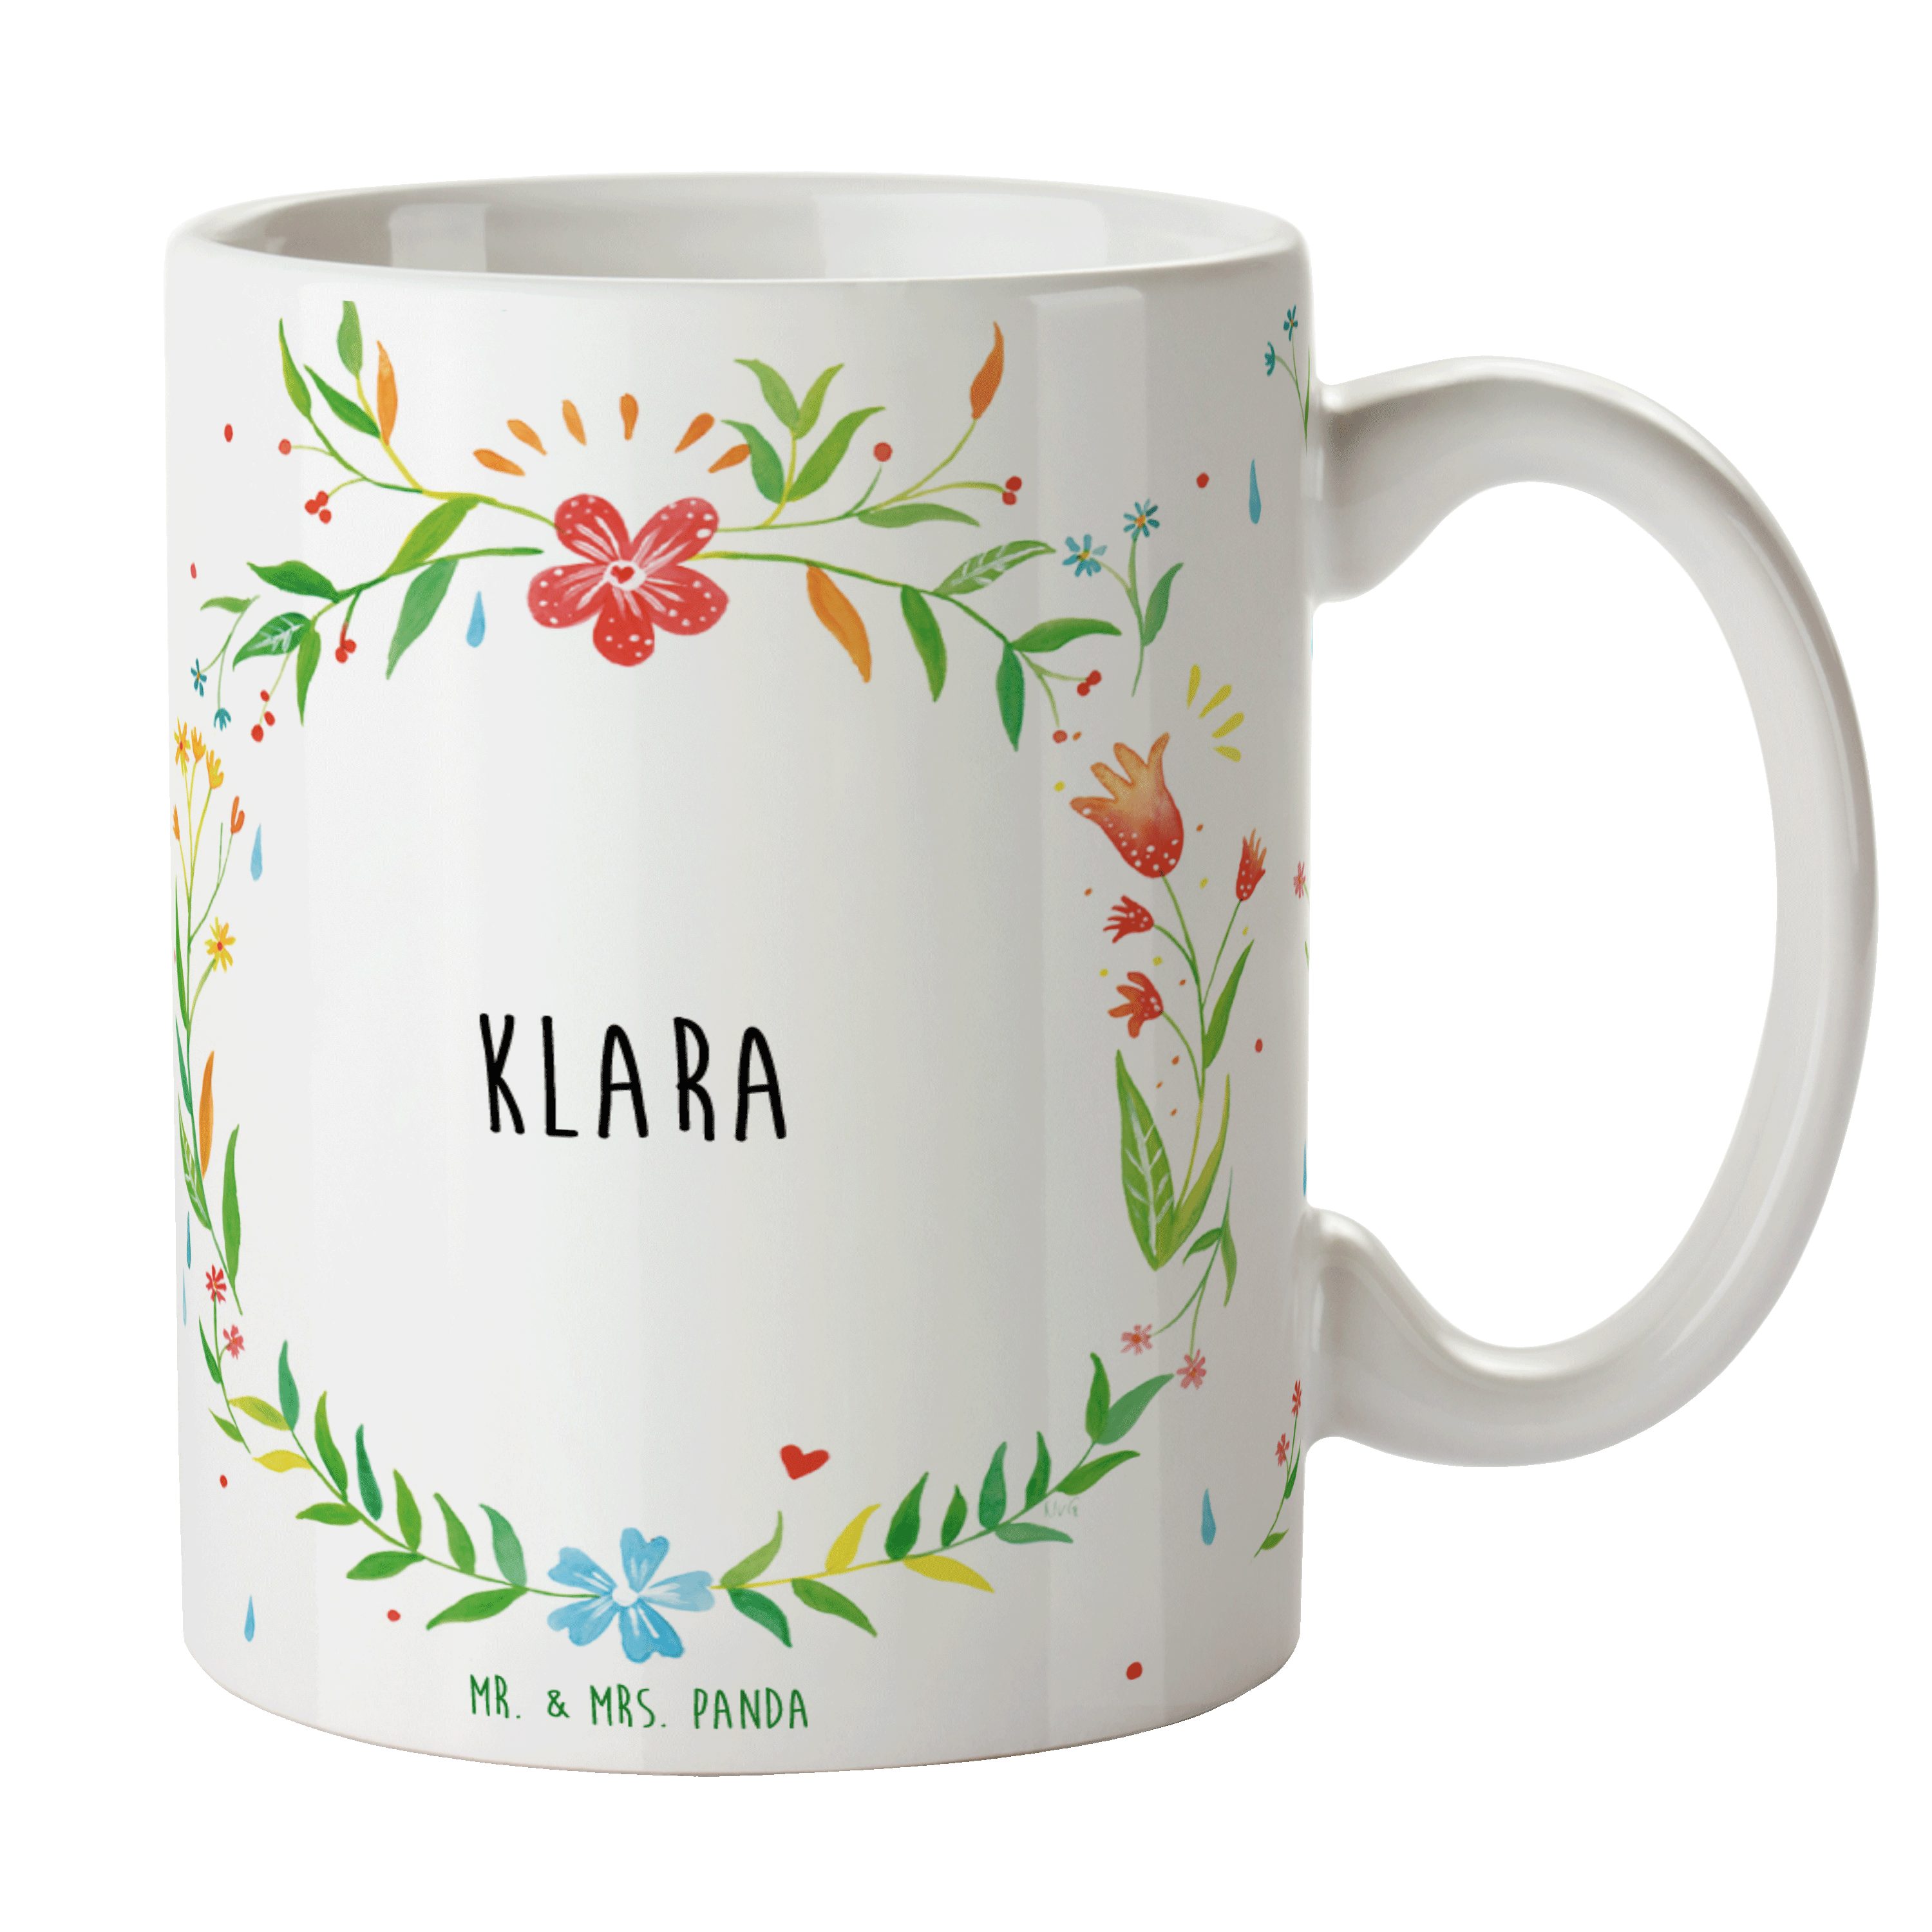 Mr. & Mrs. Panda Tasse Klara - Geschenk, Kaffeebecher, Porzellantasse, Kaffeetasse, Teebeche, Keramik